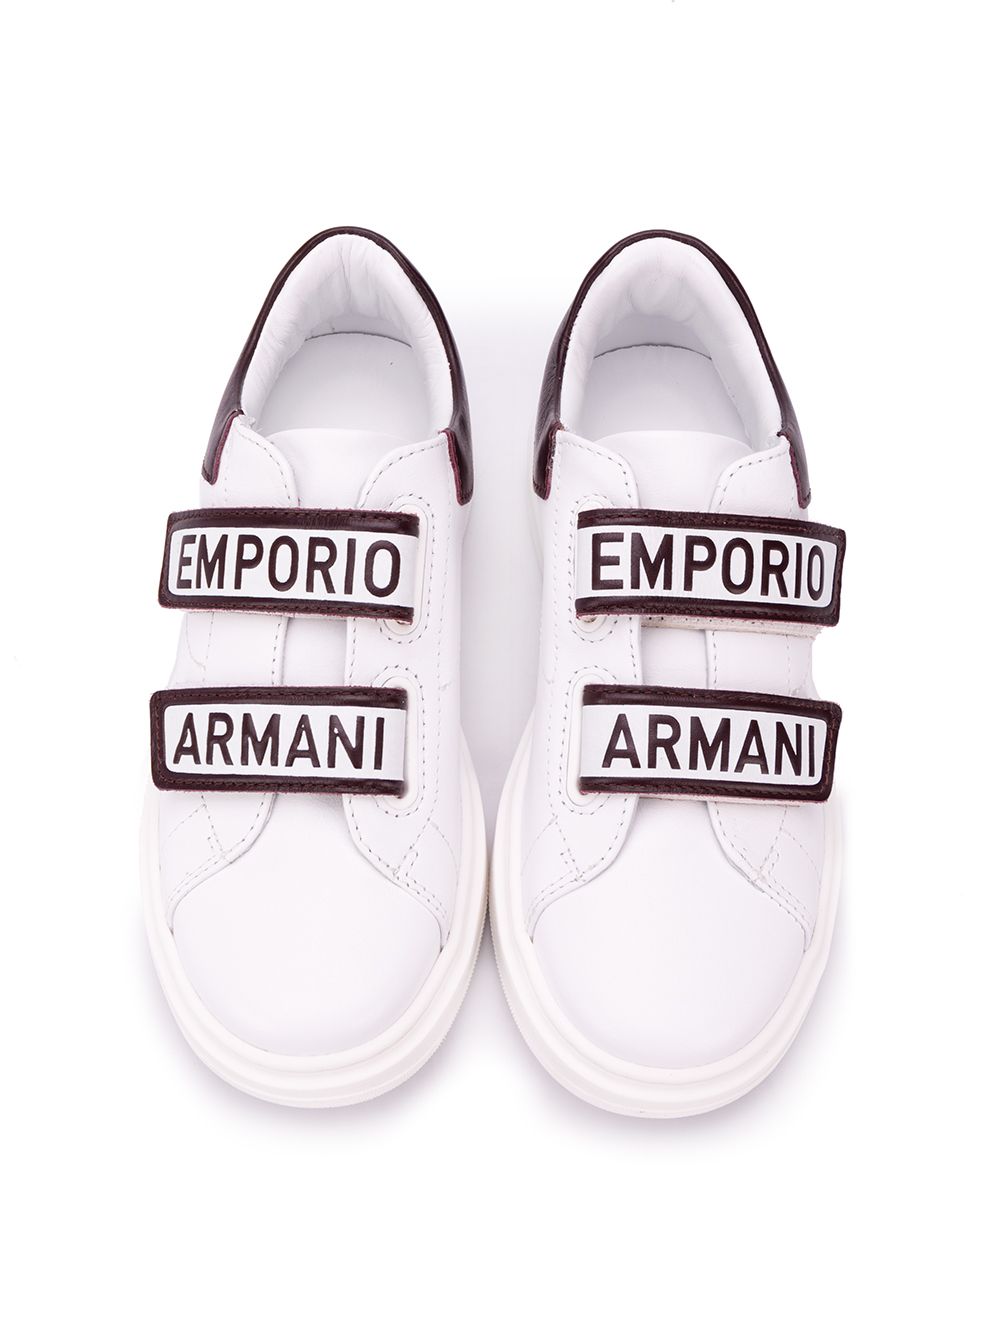 EMPORIO ARMANI KIDS Logo touch strap sneakers White/Brown - MAISONDEFASHION.COM